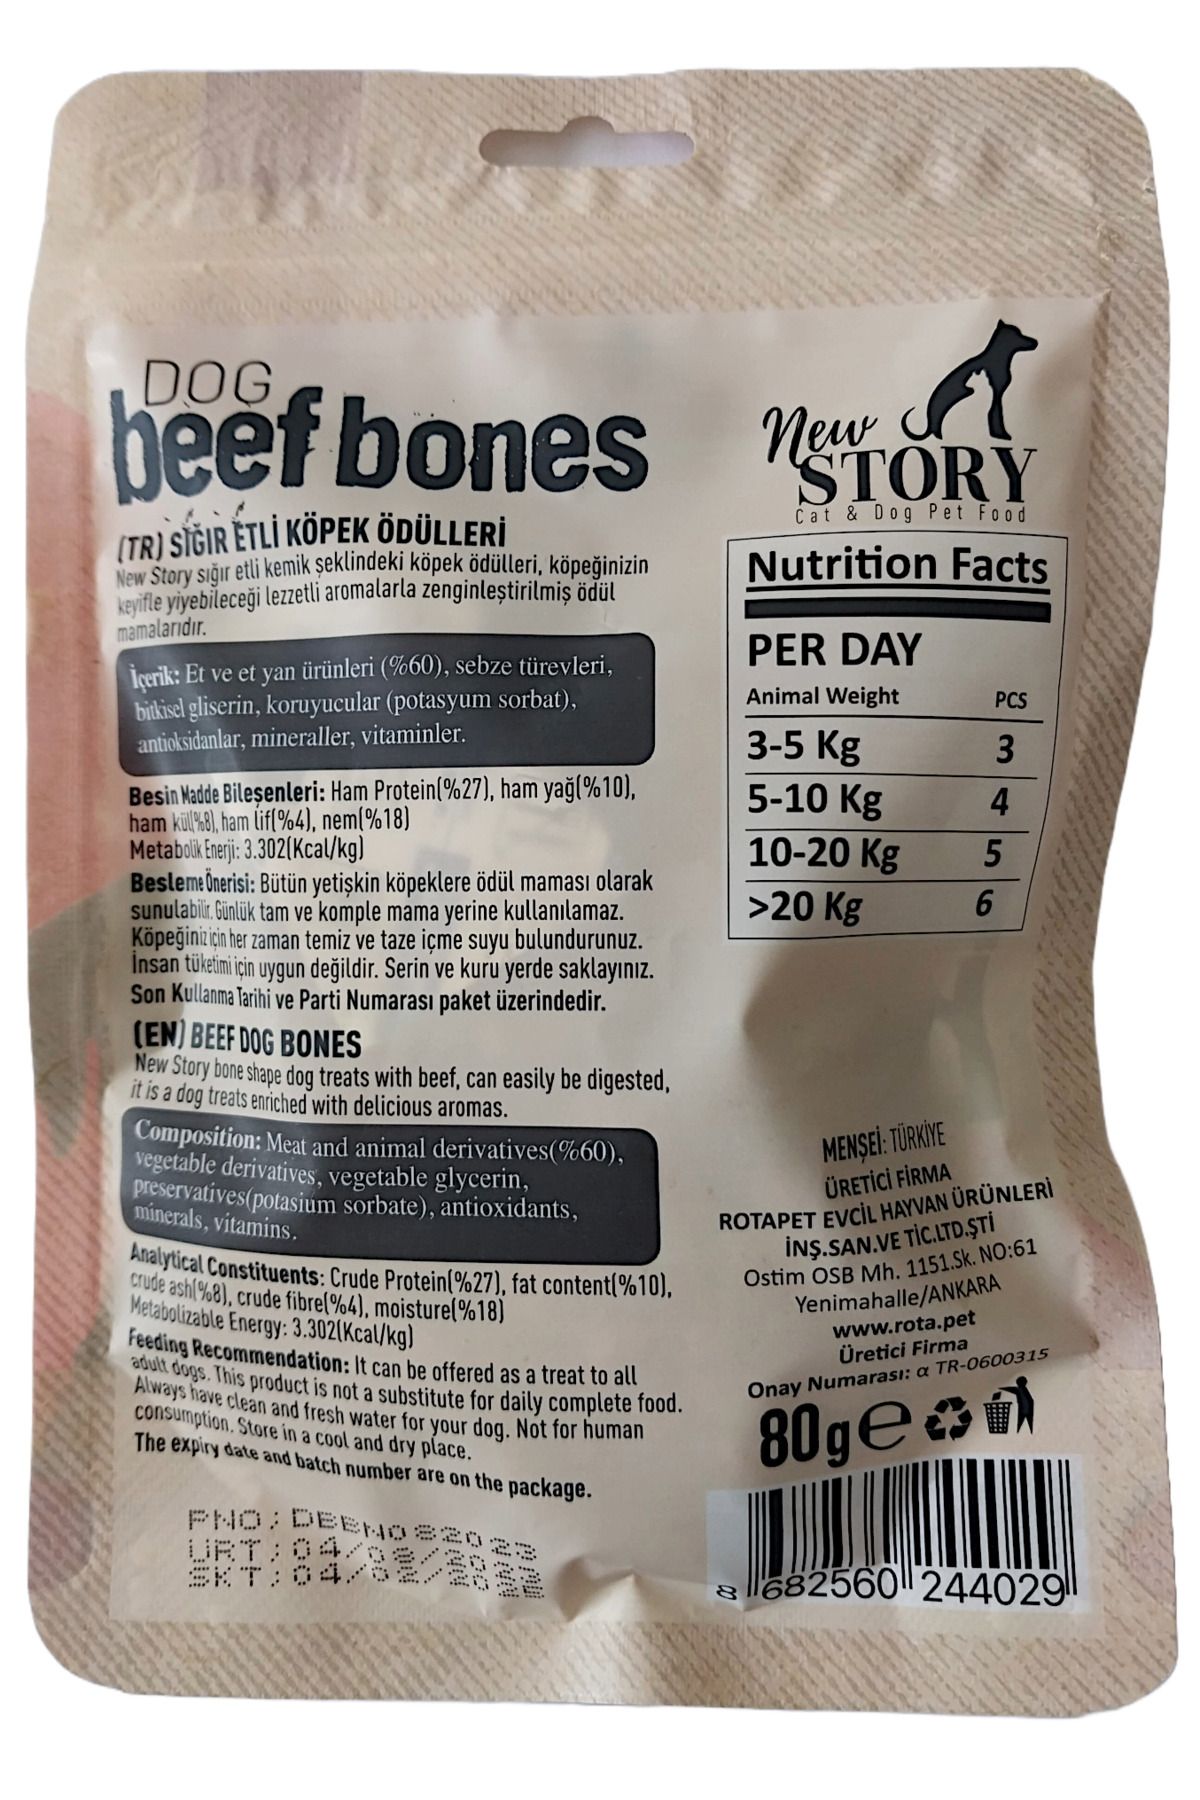 New Story Dog Beef Bones Dana Etli Kopek Odulu Yumusak, Atistirmalik 80 gr